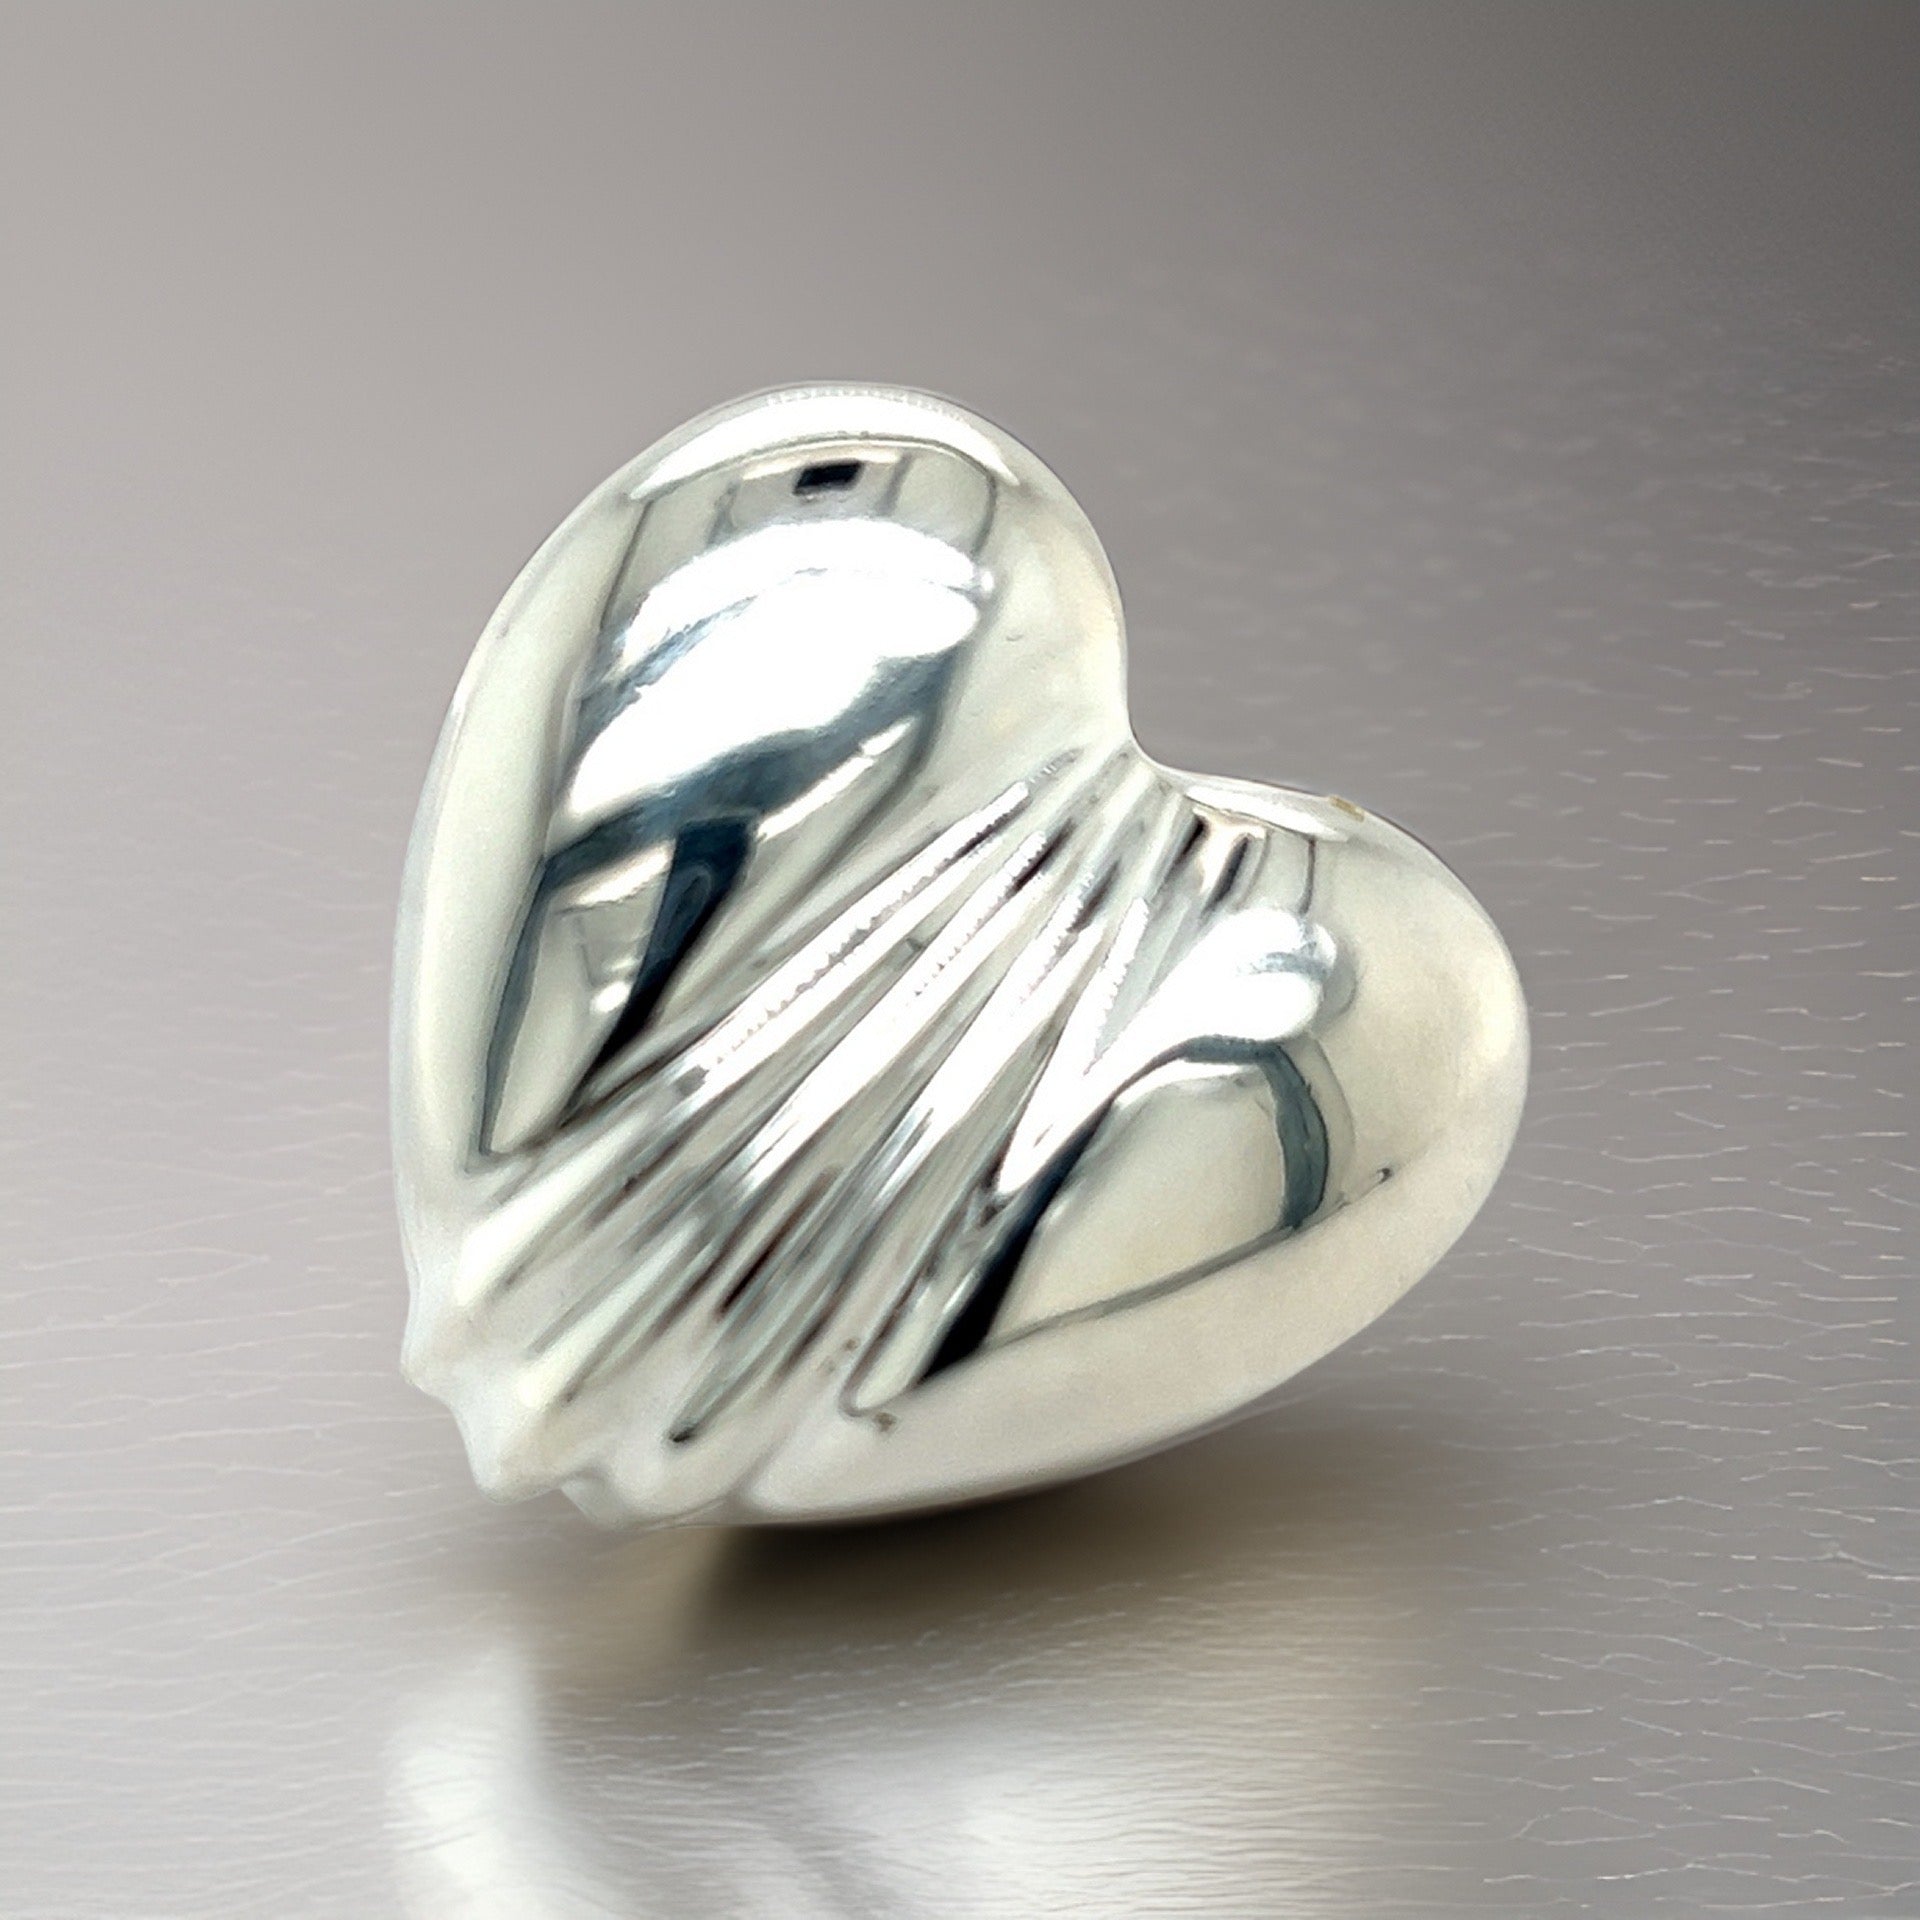 Tiffany & Co Estate Large Puffed Heart Brooch Pin Silver TIF355 - Certified Fine Jewelry